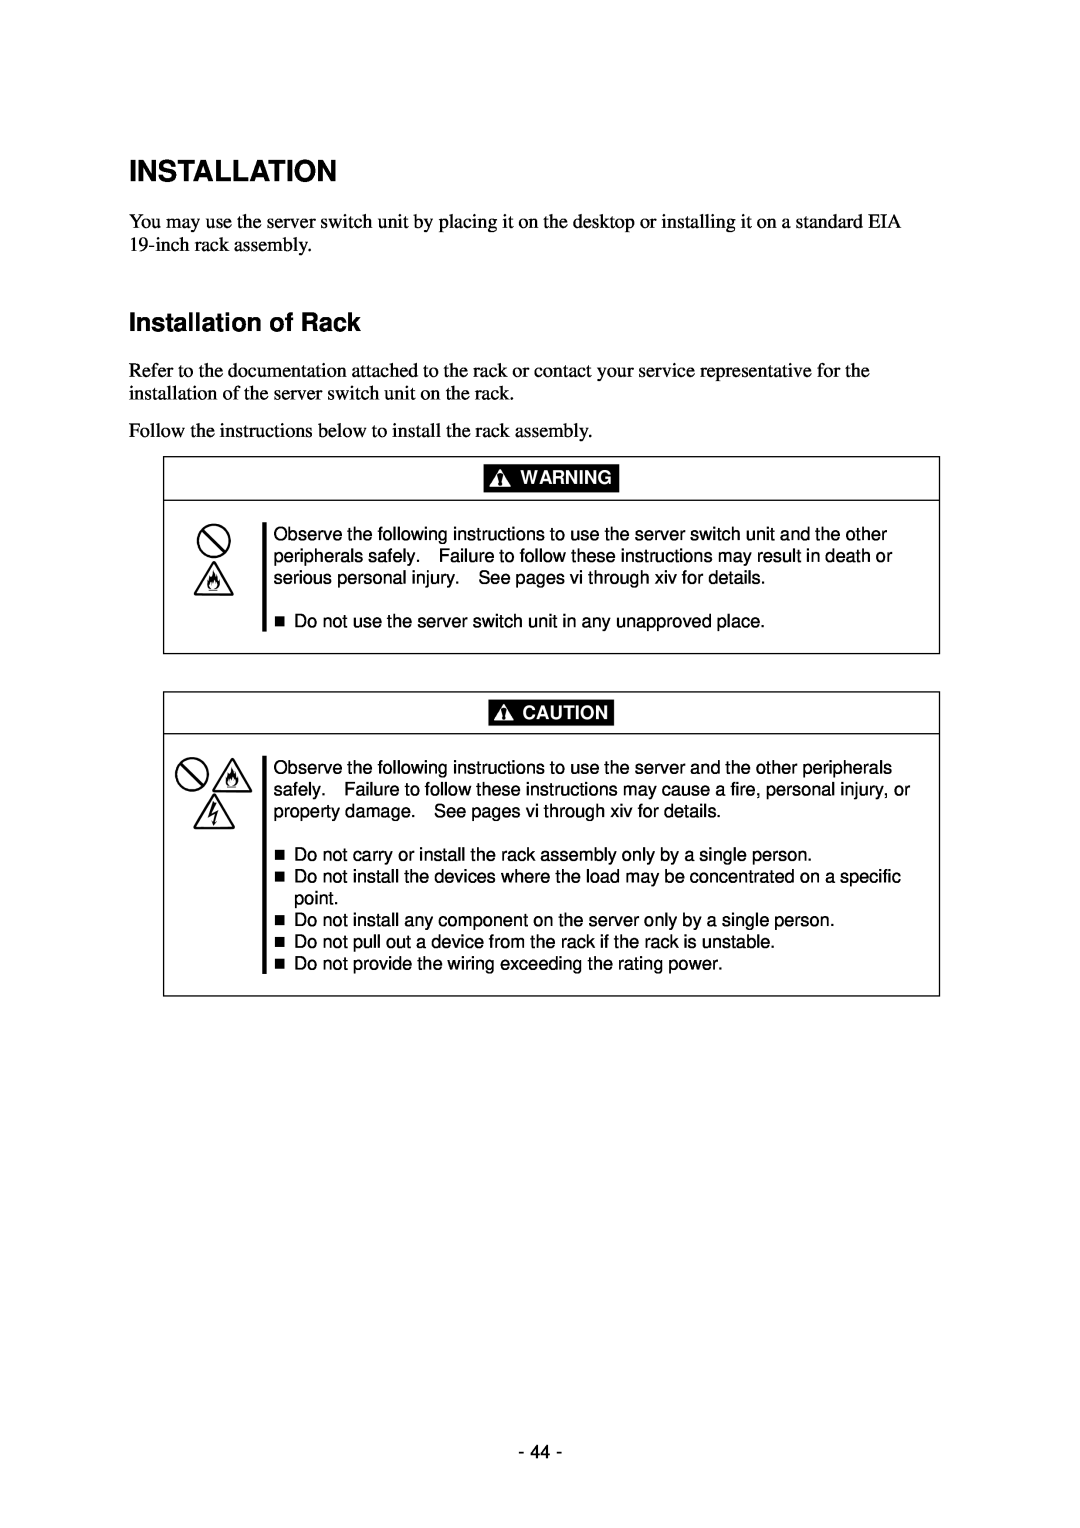 NEC N8191-09 manual Installation of Rack 